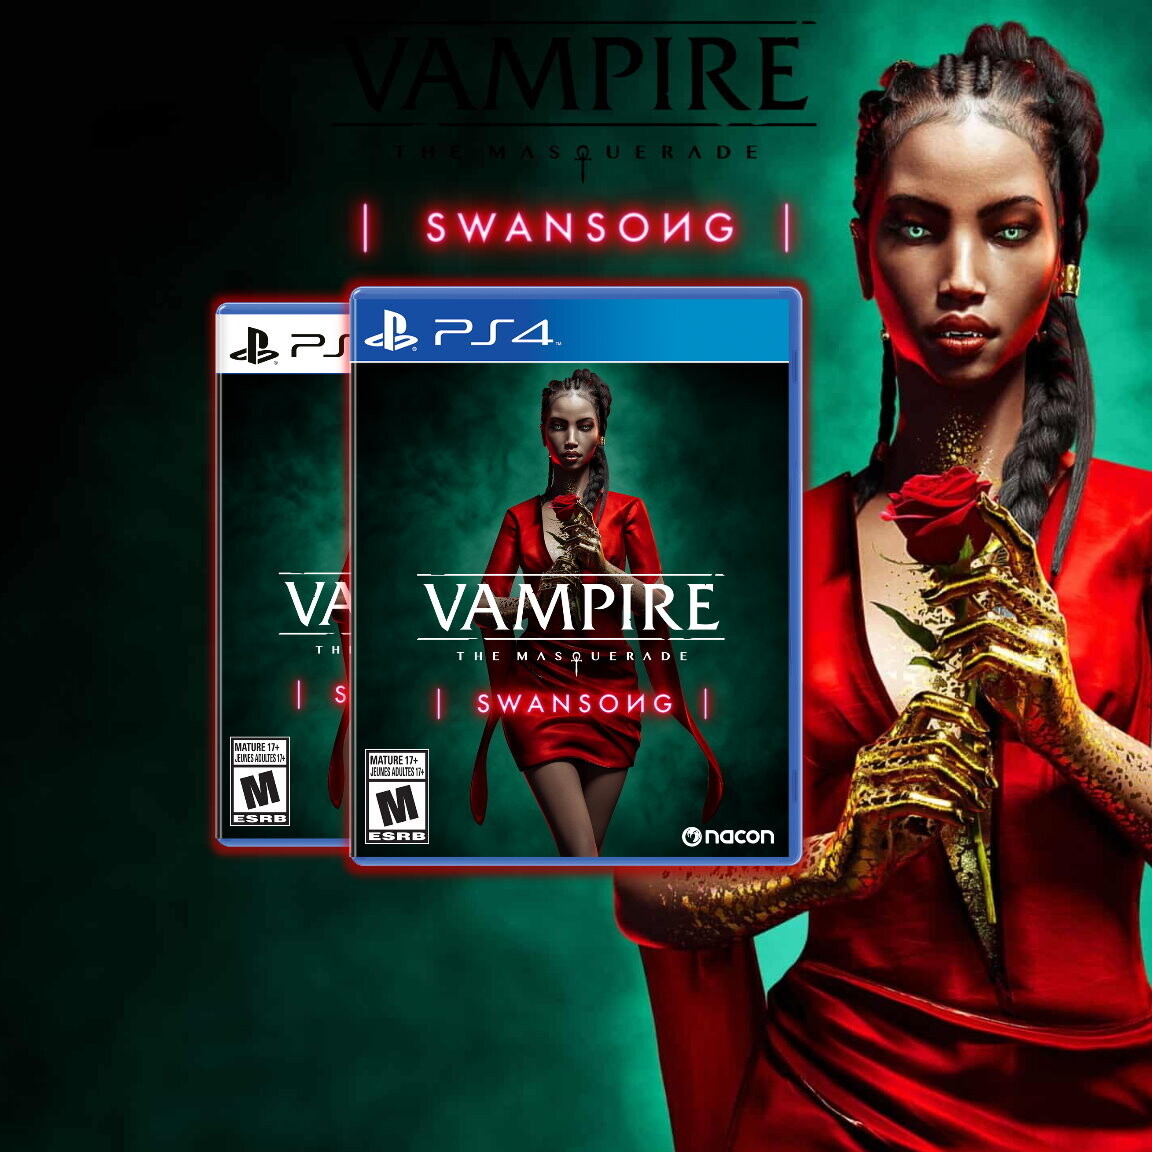  Vampire: The Masquerade - Swansong (PS5) : Maximum